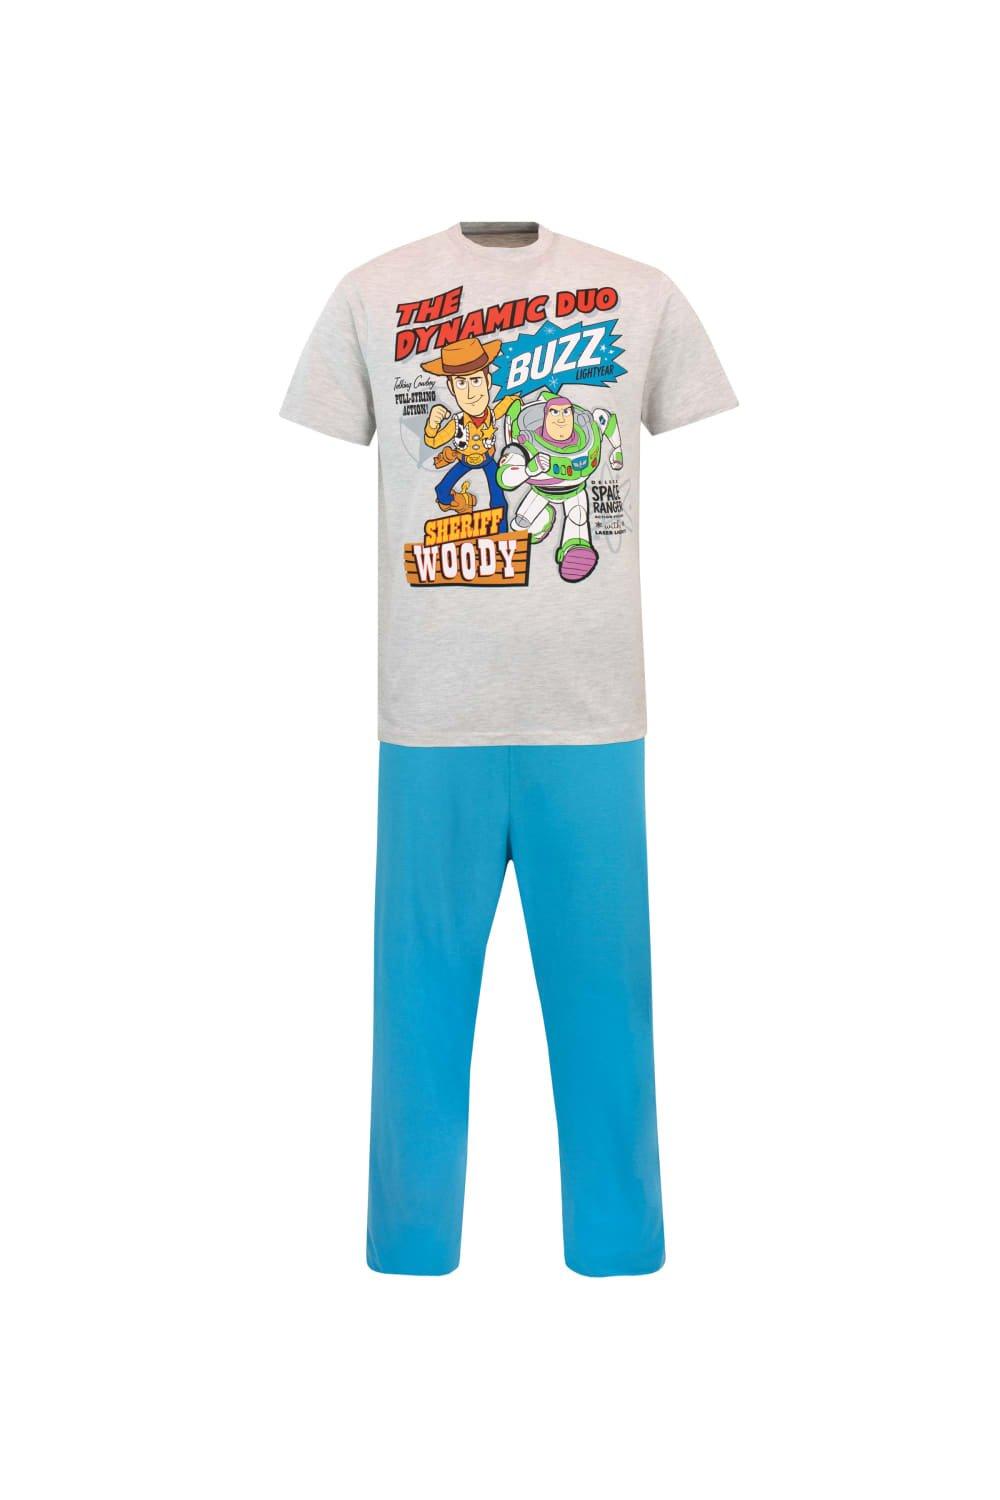 Toy Story Buzz And Woody Pyjamas